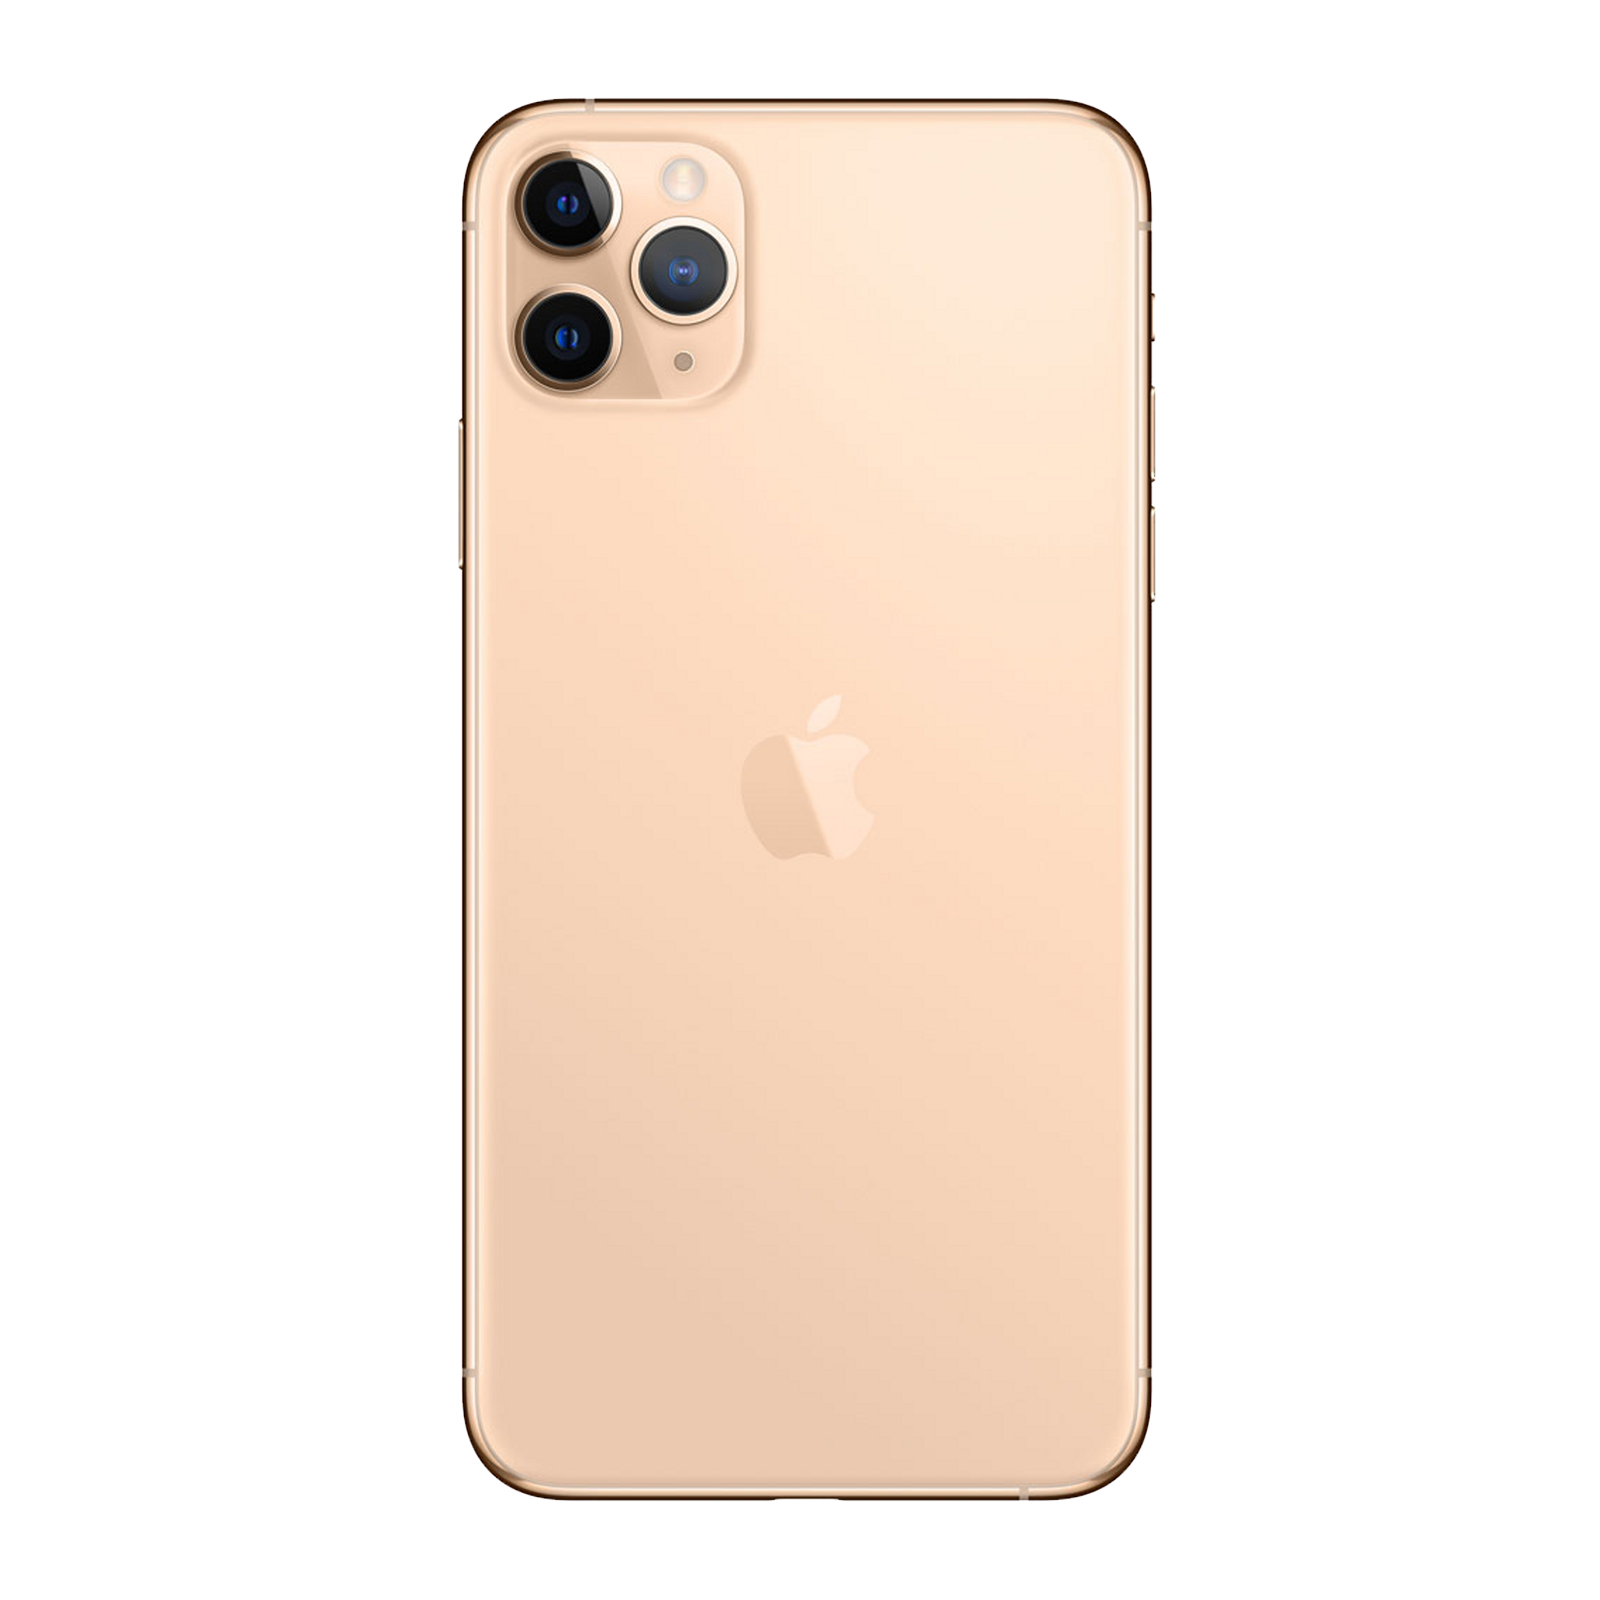 Apple iPhone 11 Pro 512GB Gold Good - Sprint